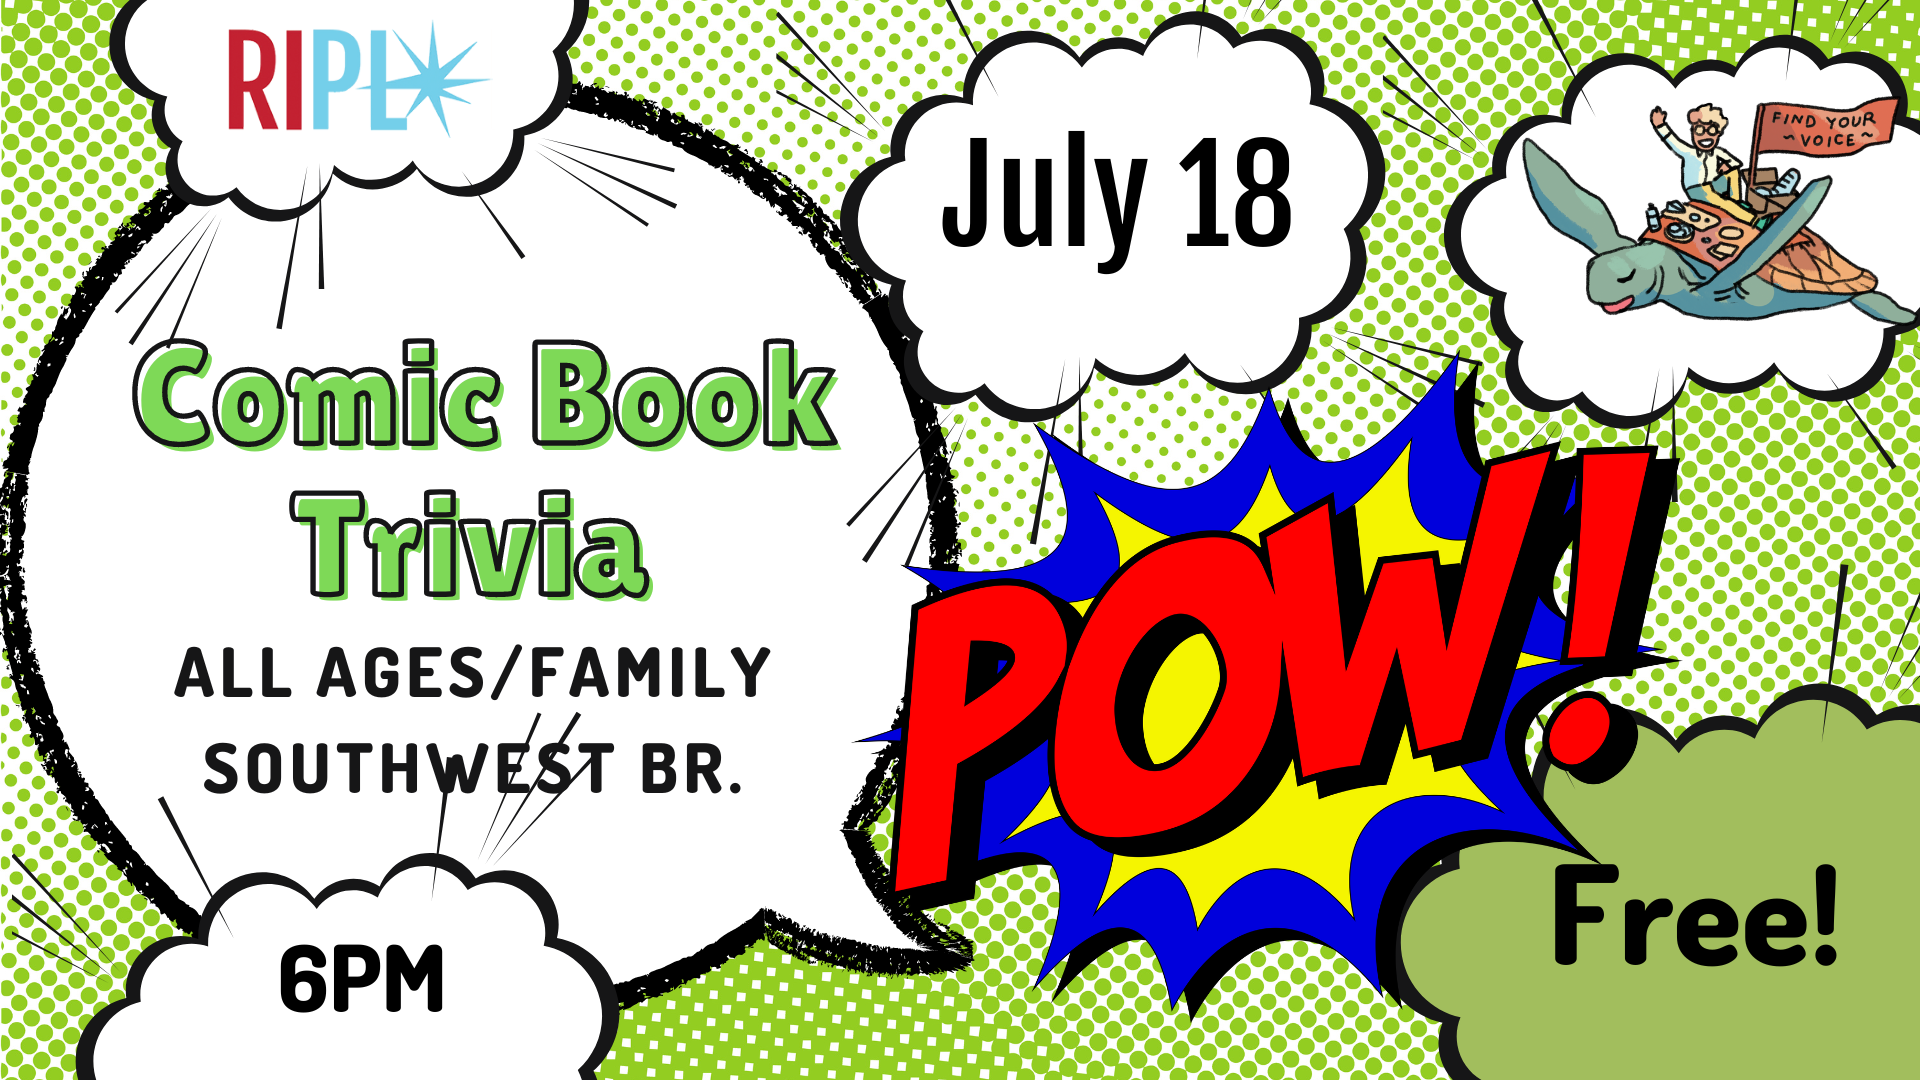 Comic book background_POW illustration July 18, Comic Book Trivia Southwest